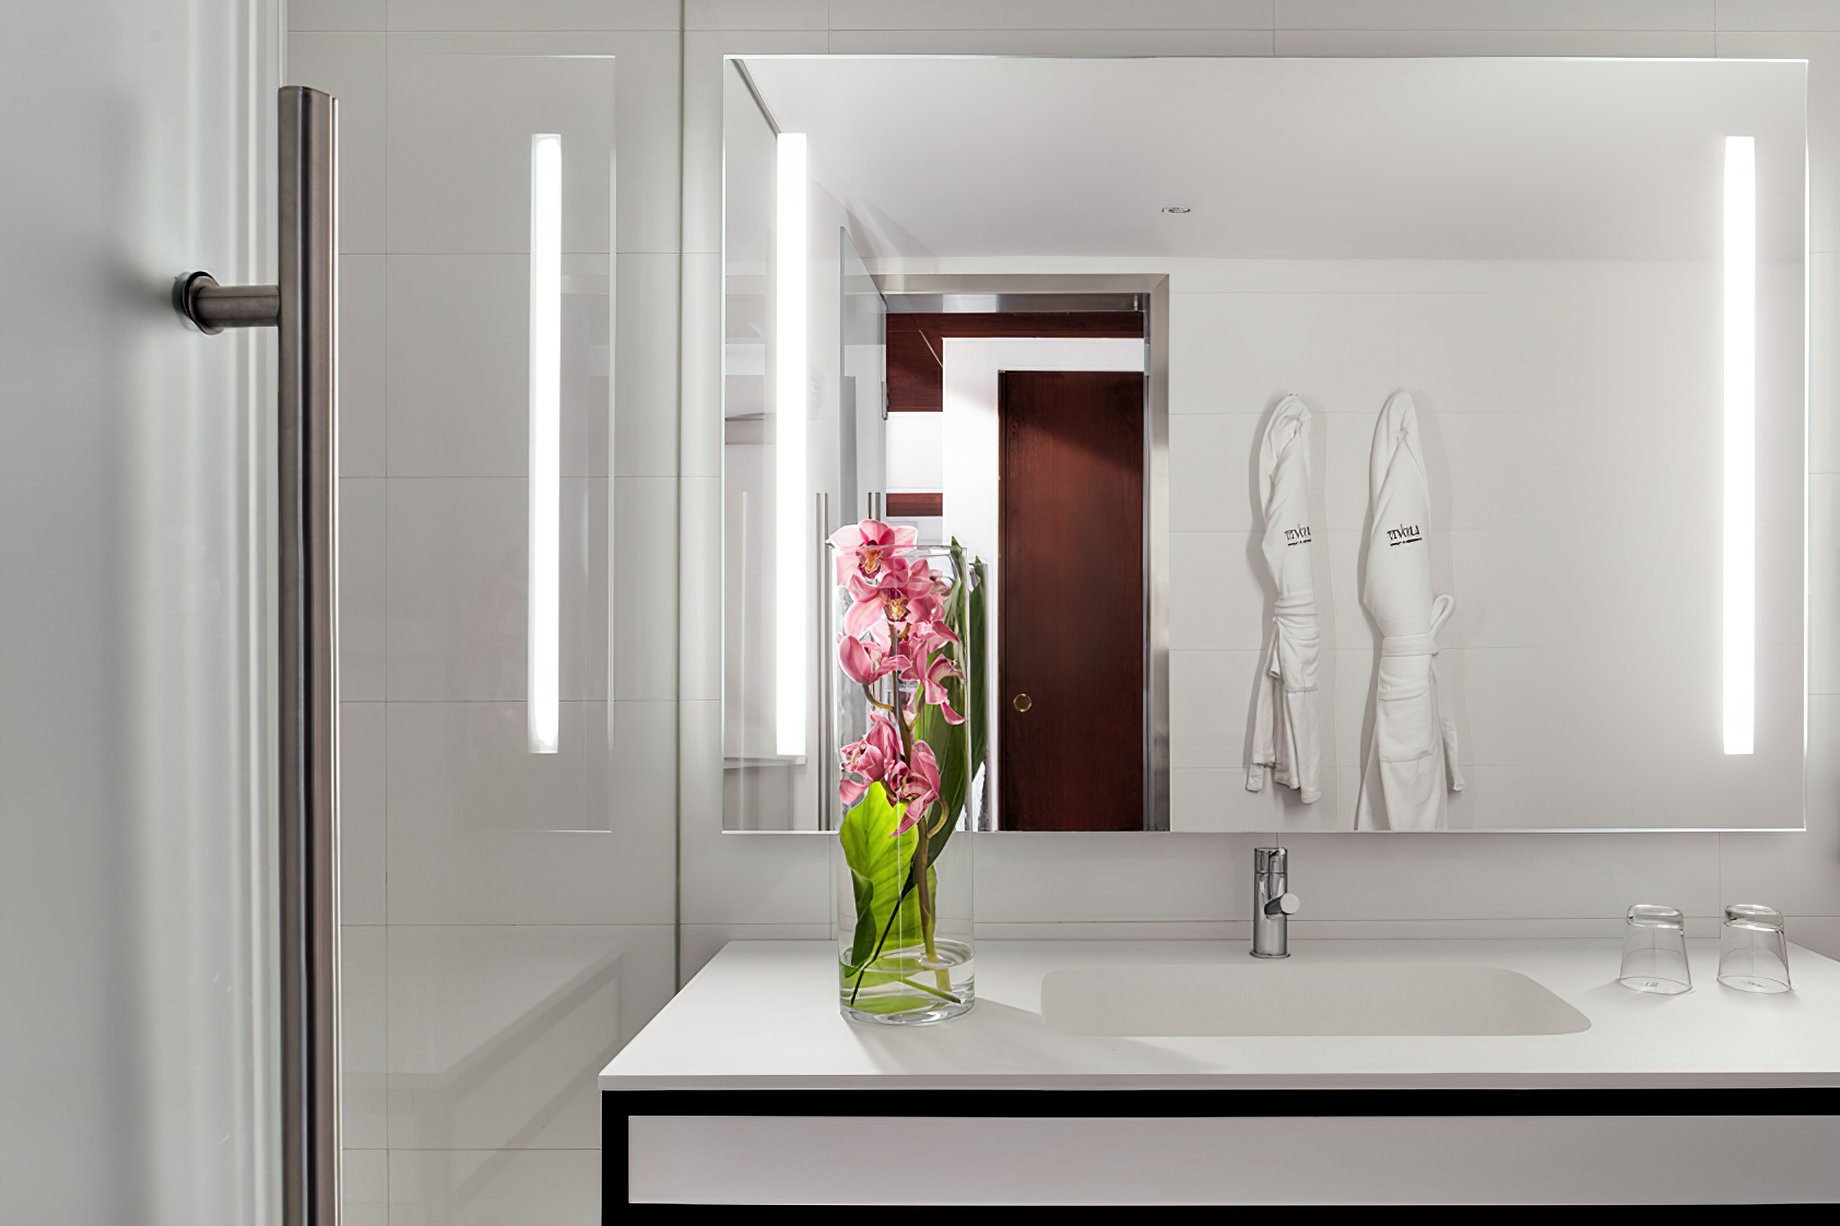 Tivoli Marina Vilamoura Algarve Resort – Portugal – Guest Bathroom